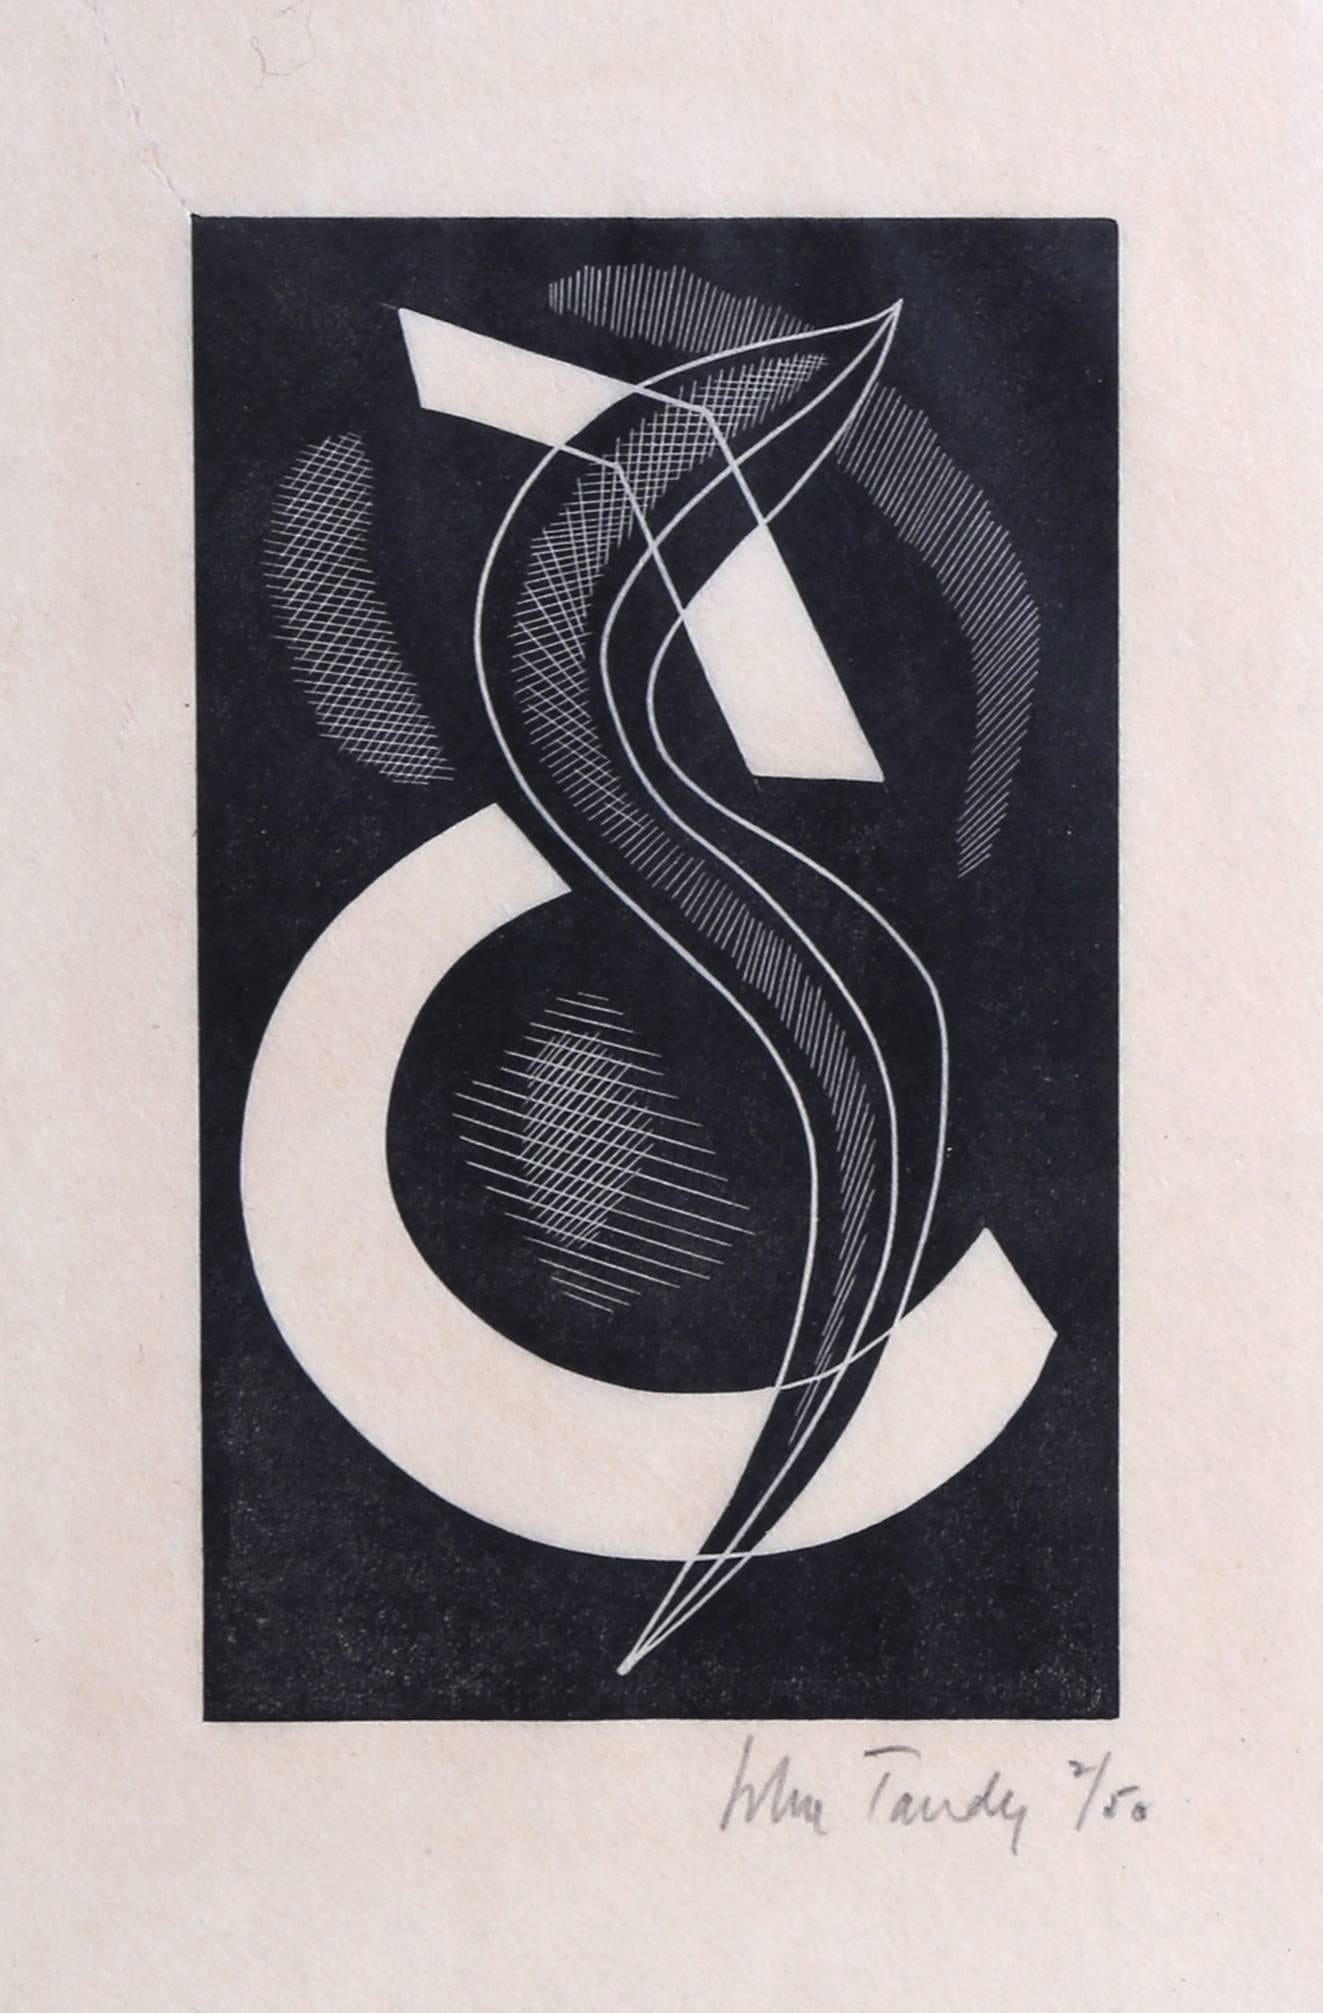 John Tandy Abstract Print - Modern Abstract Woodcut by John Tardy